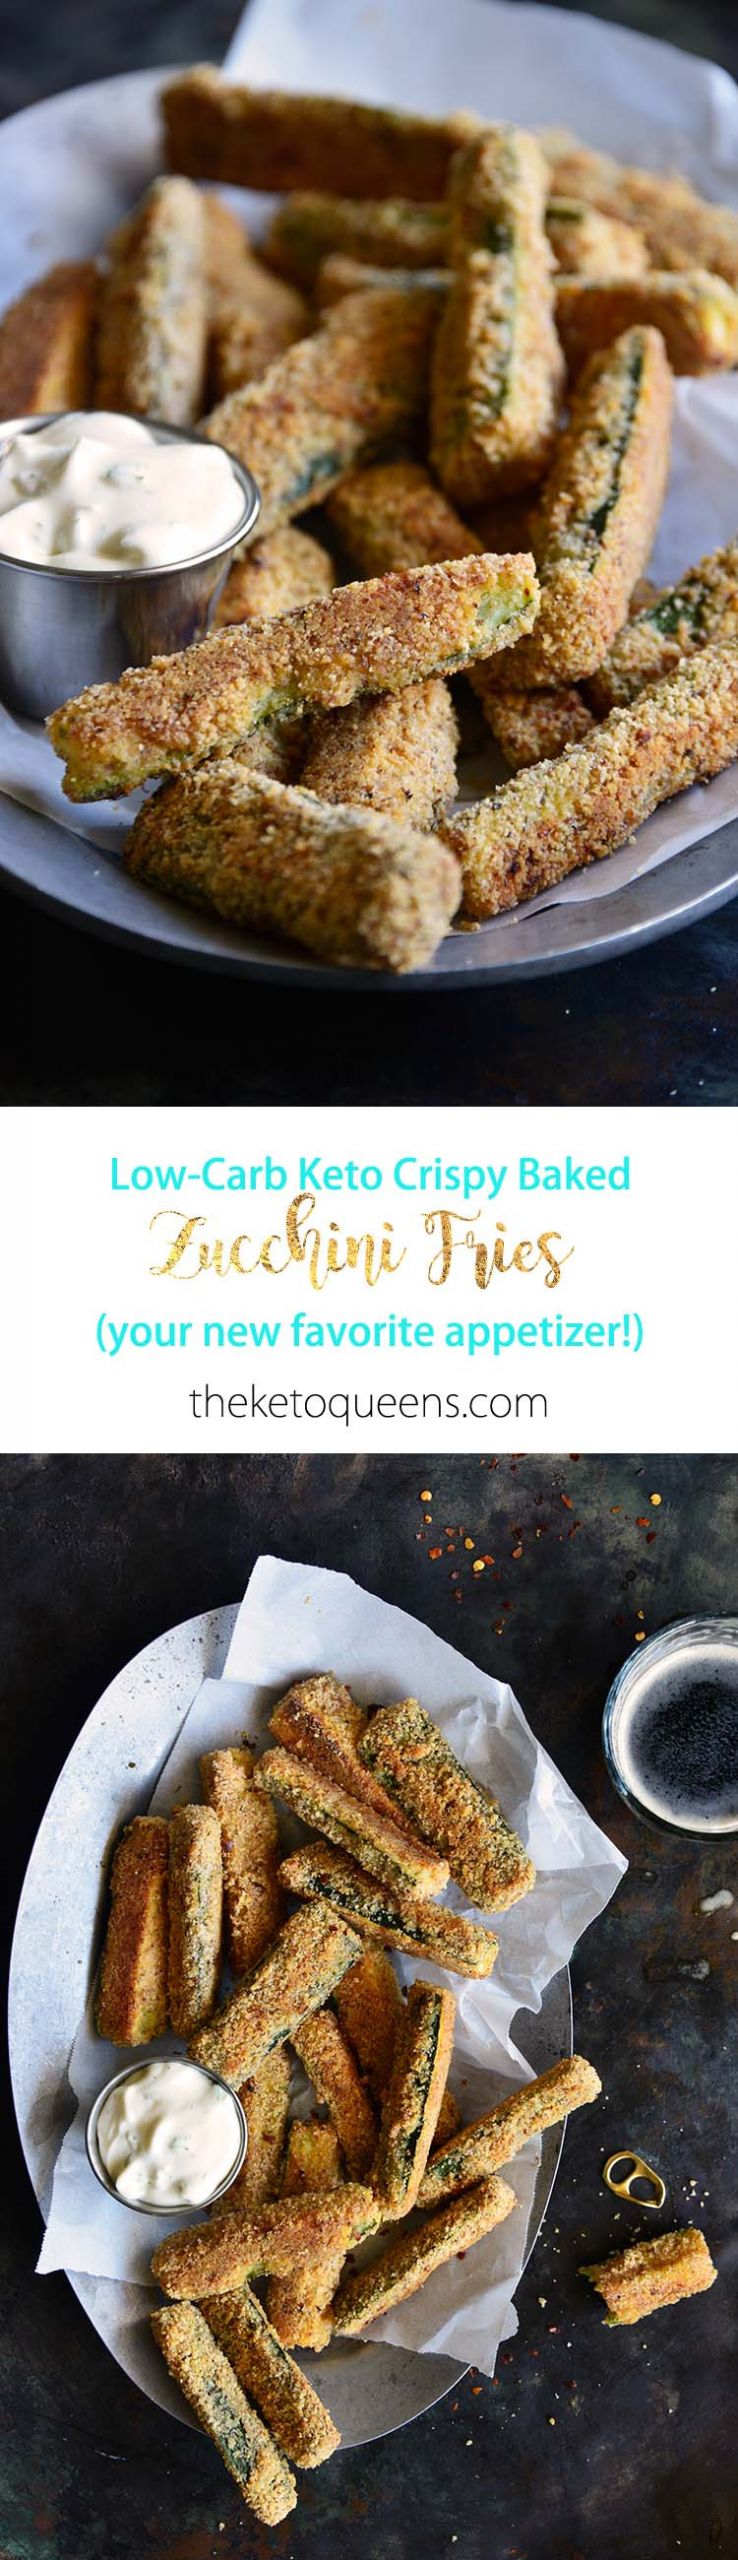 Baked Zucchini Keto
 Low Carb Keto Crispy Baked Zucchini Fries Recipe